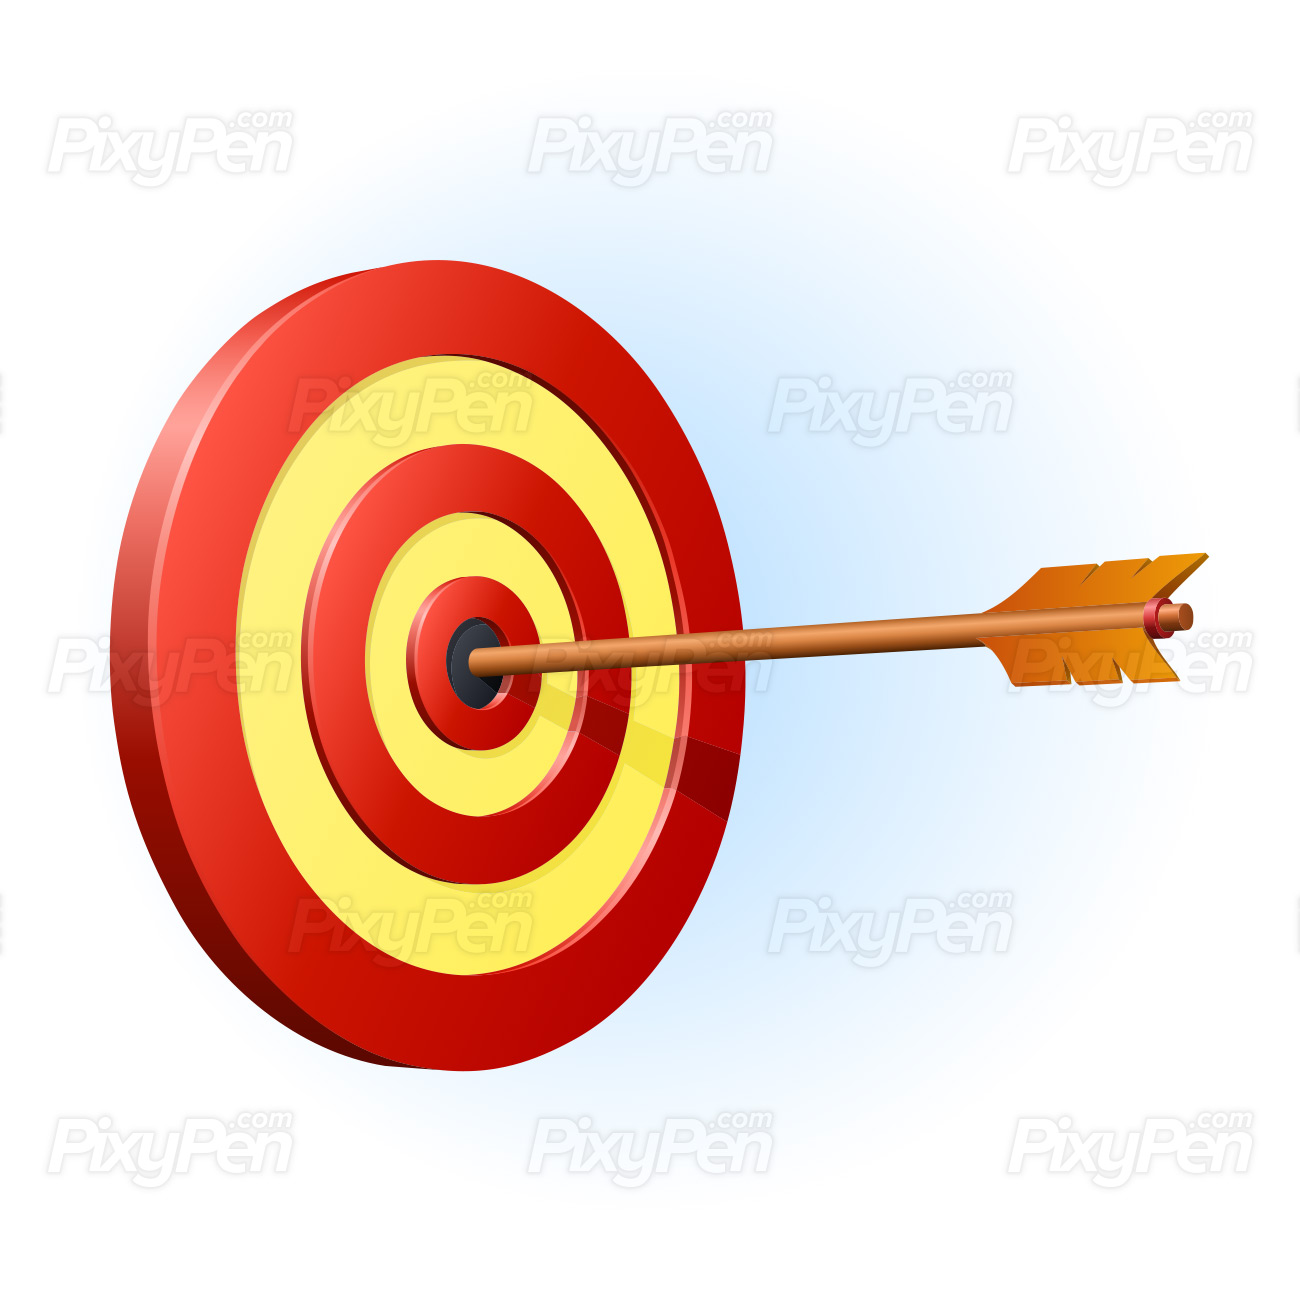 Archery target ring with arrow hitting bullseye. Round shaped